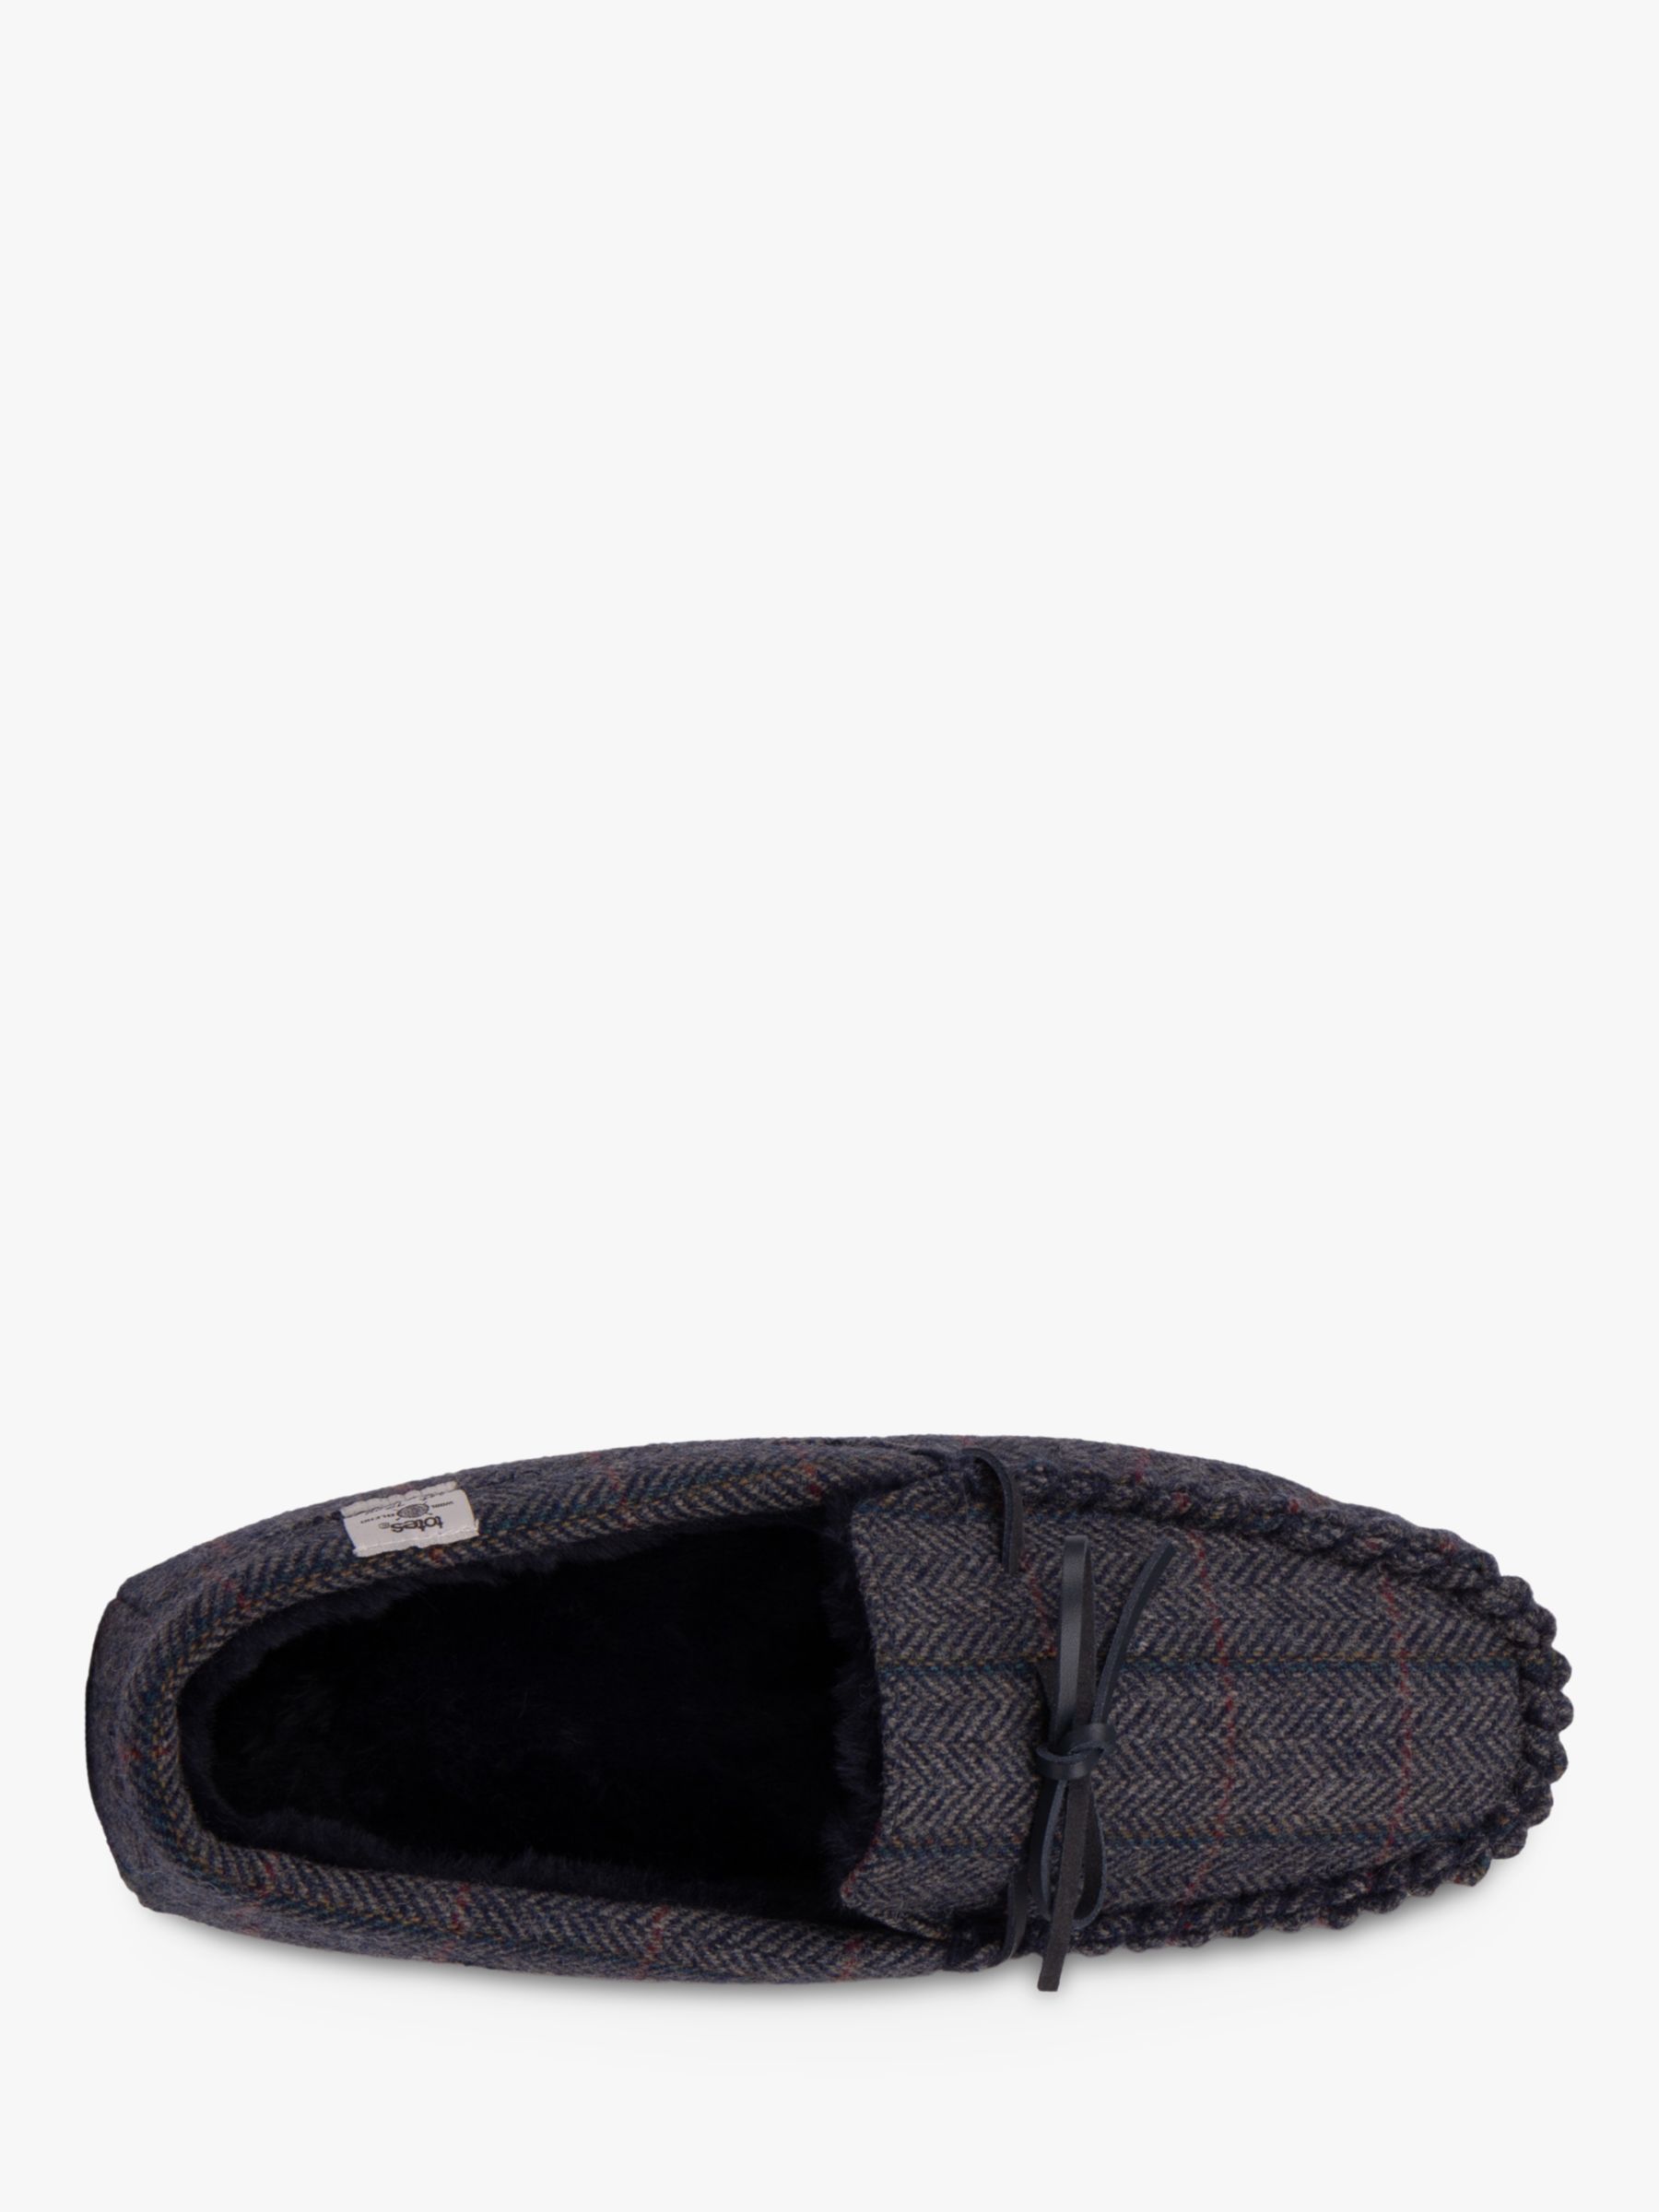 totes Herringbone Moccasin Style Wool Blend Slippers, Navy/Multi, S